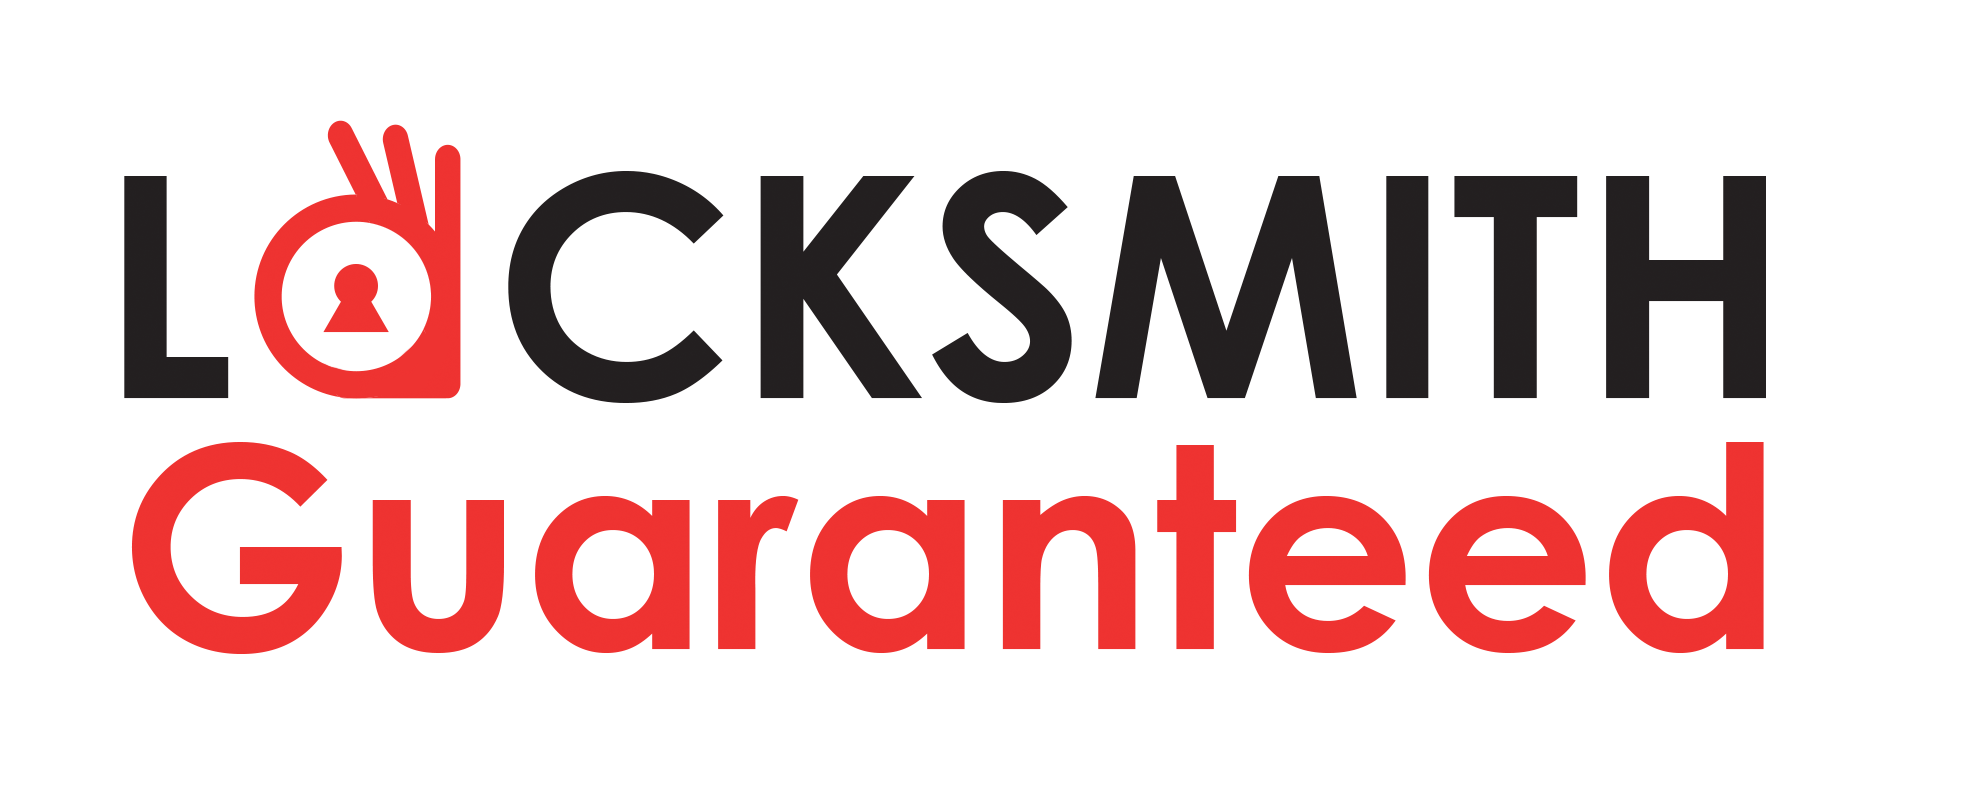 Locksmith Guaranteed